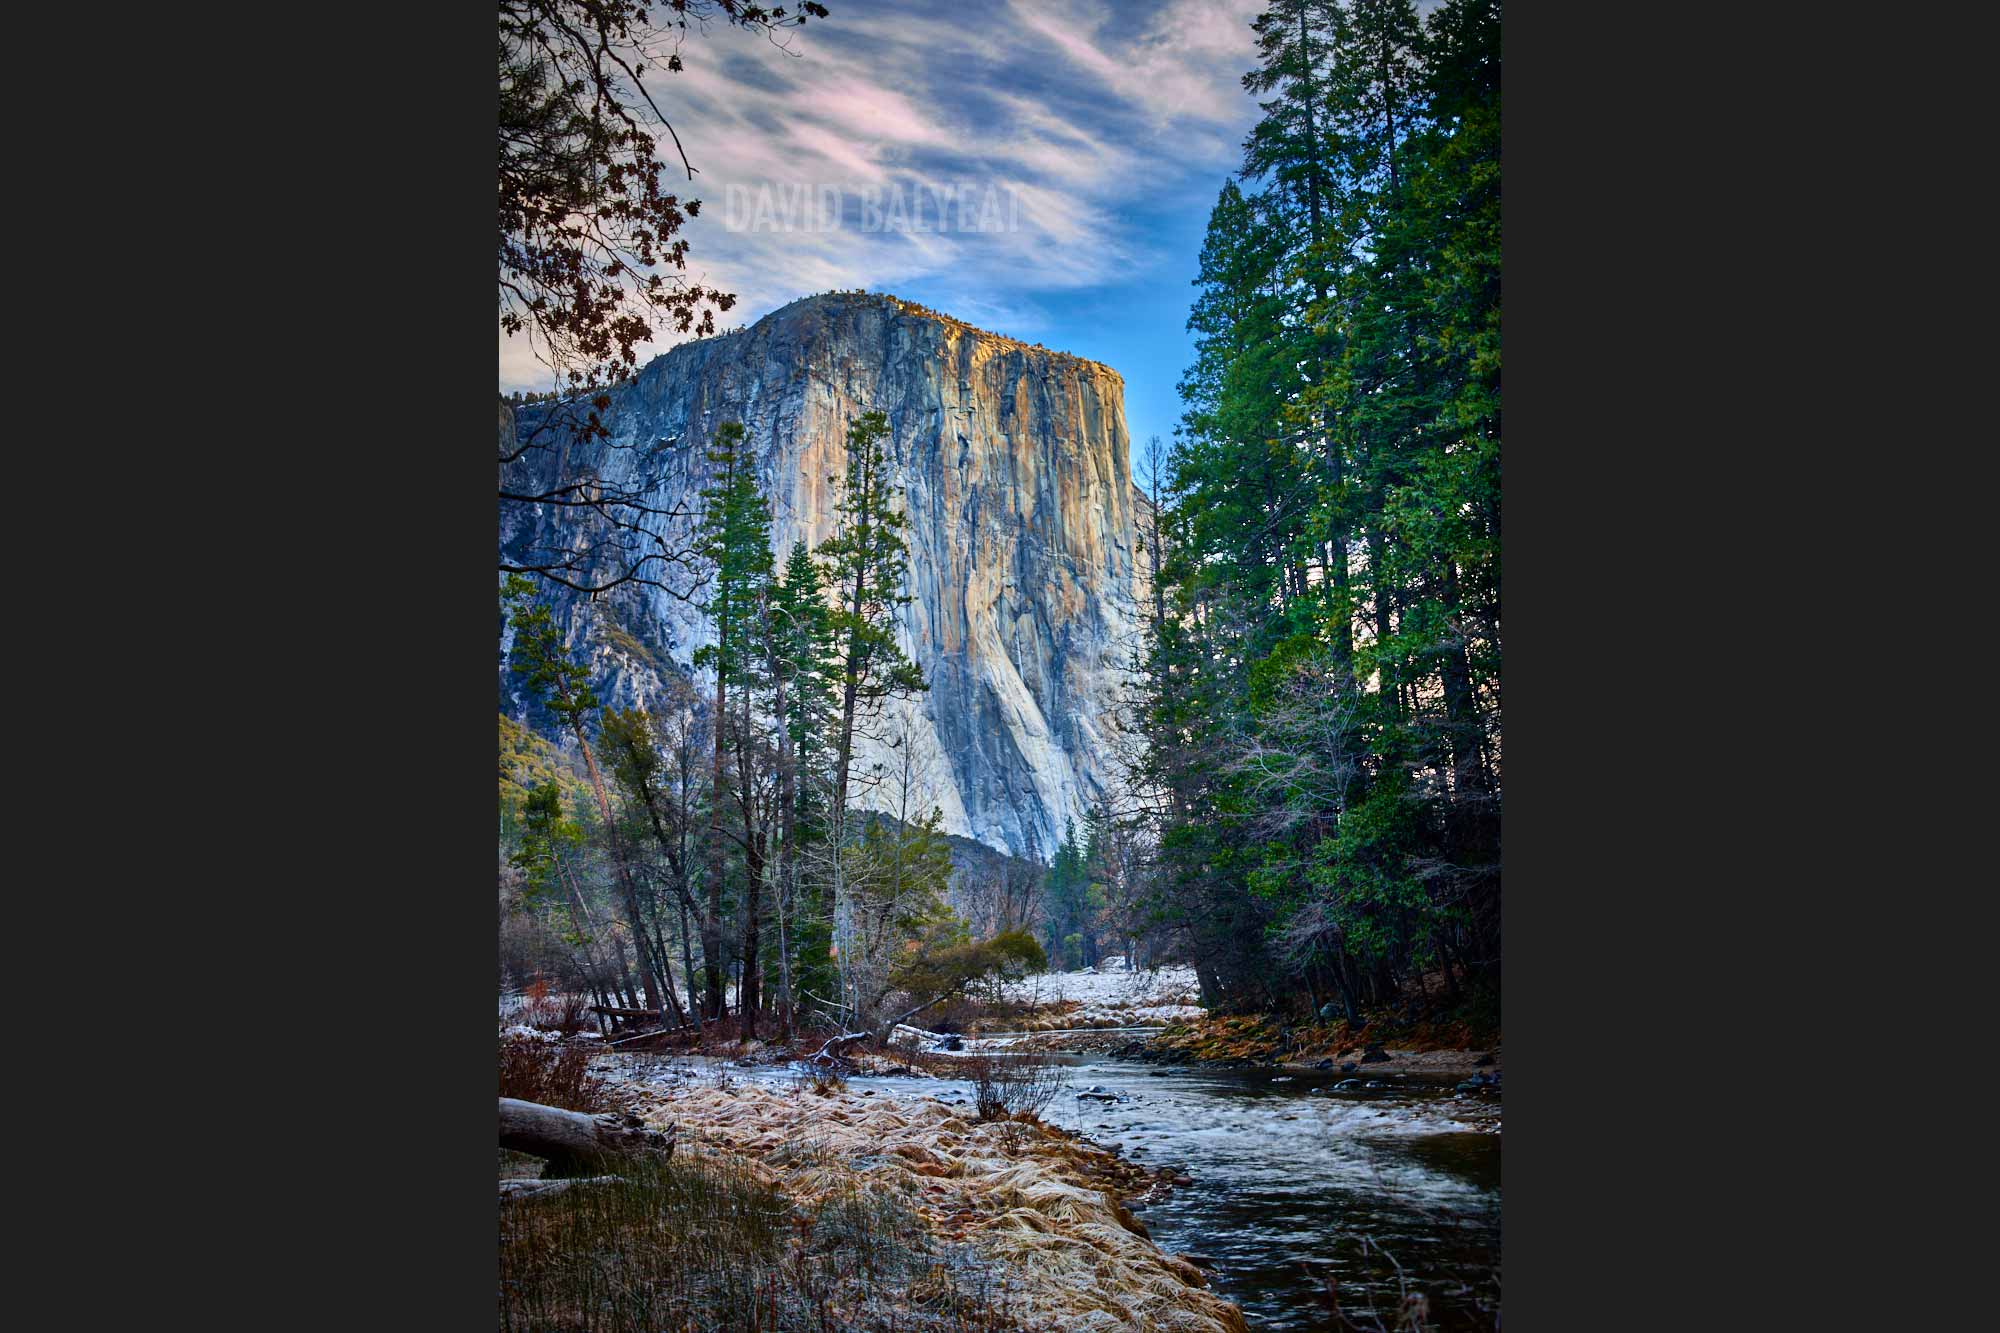 El Capitan in Yosemite National Park ultra high-definition landscape photography